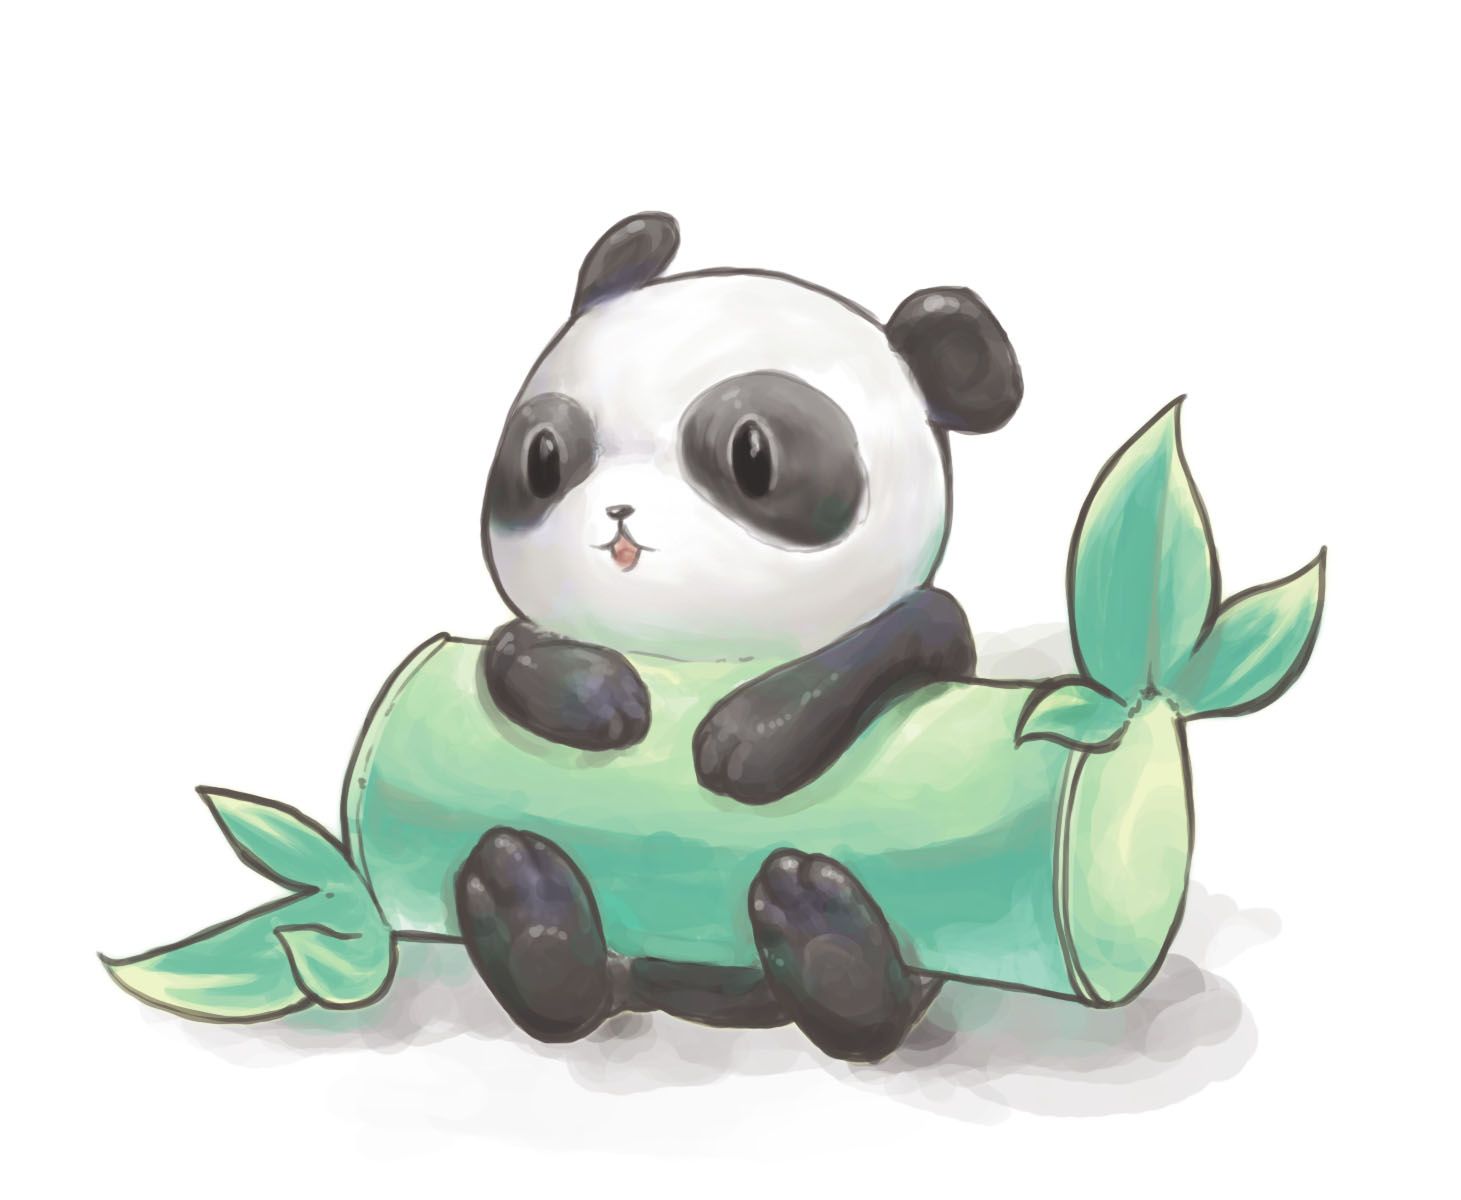 Hình vẽ gấu trúc panda